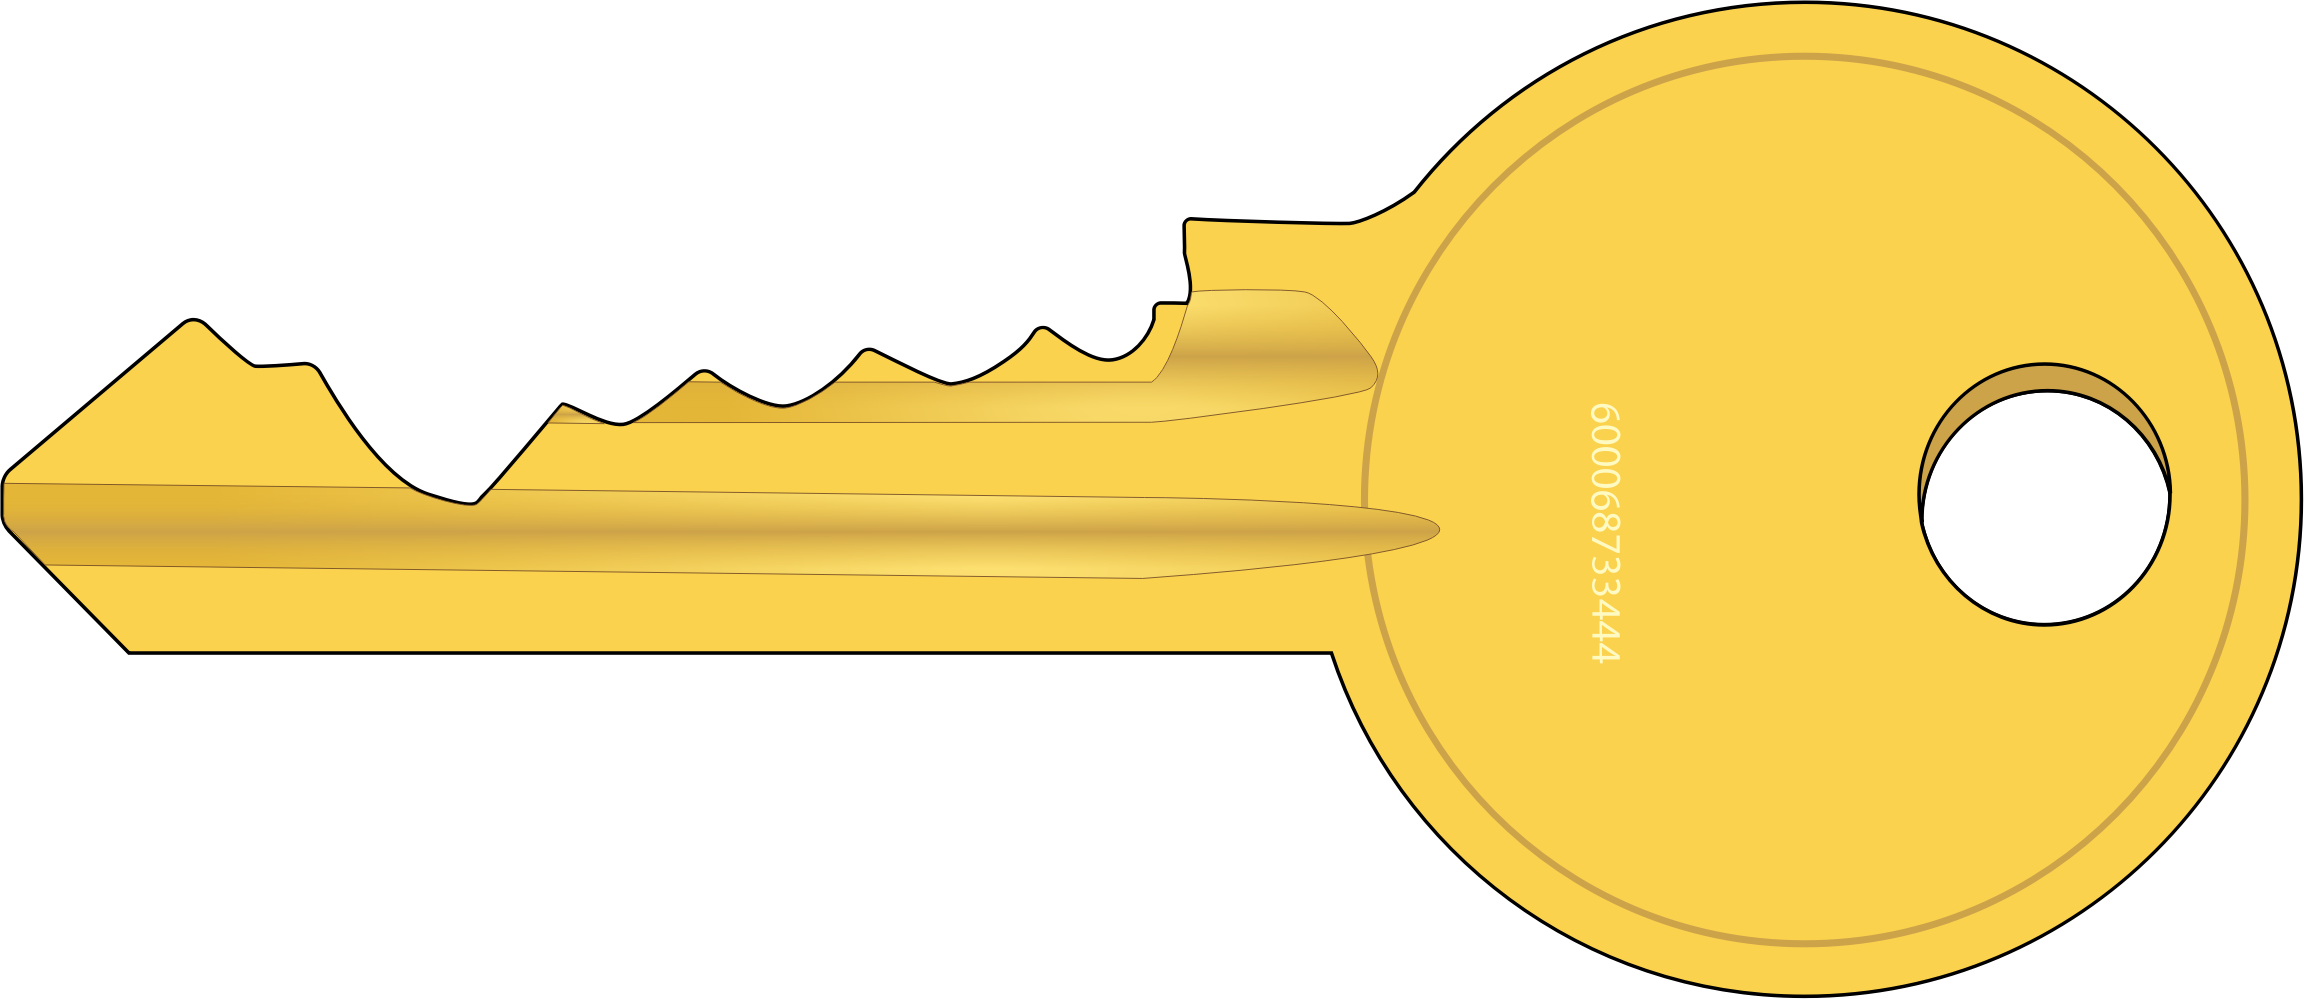 Key HD PNG - 92879